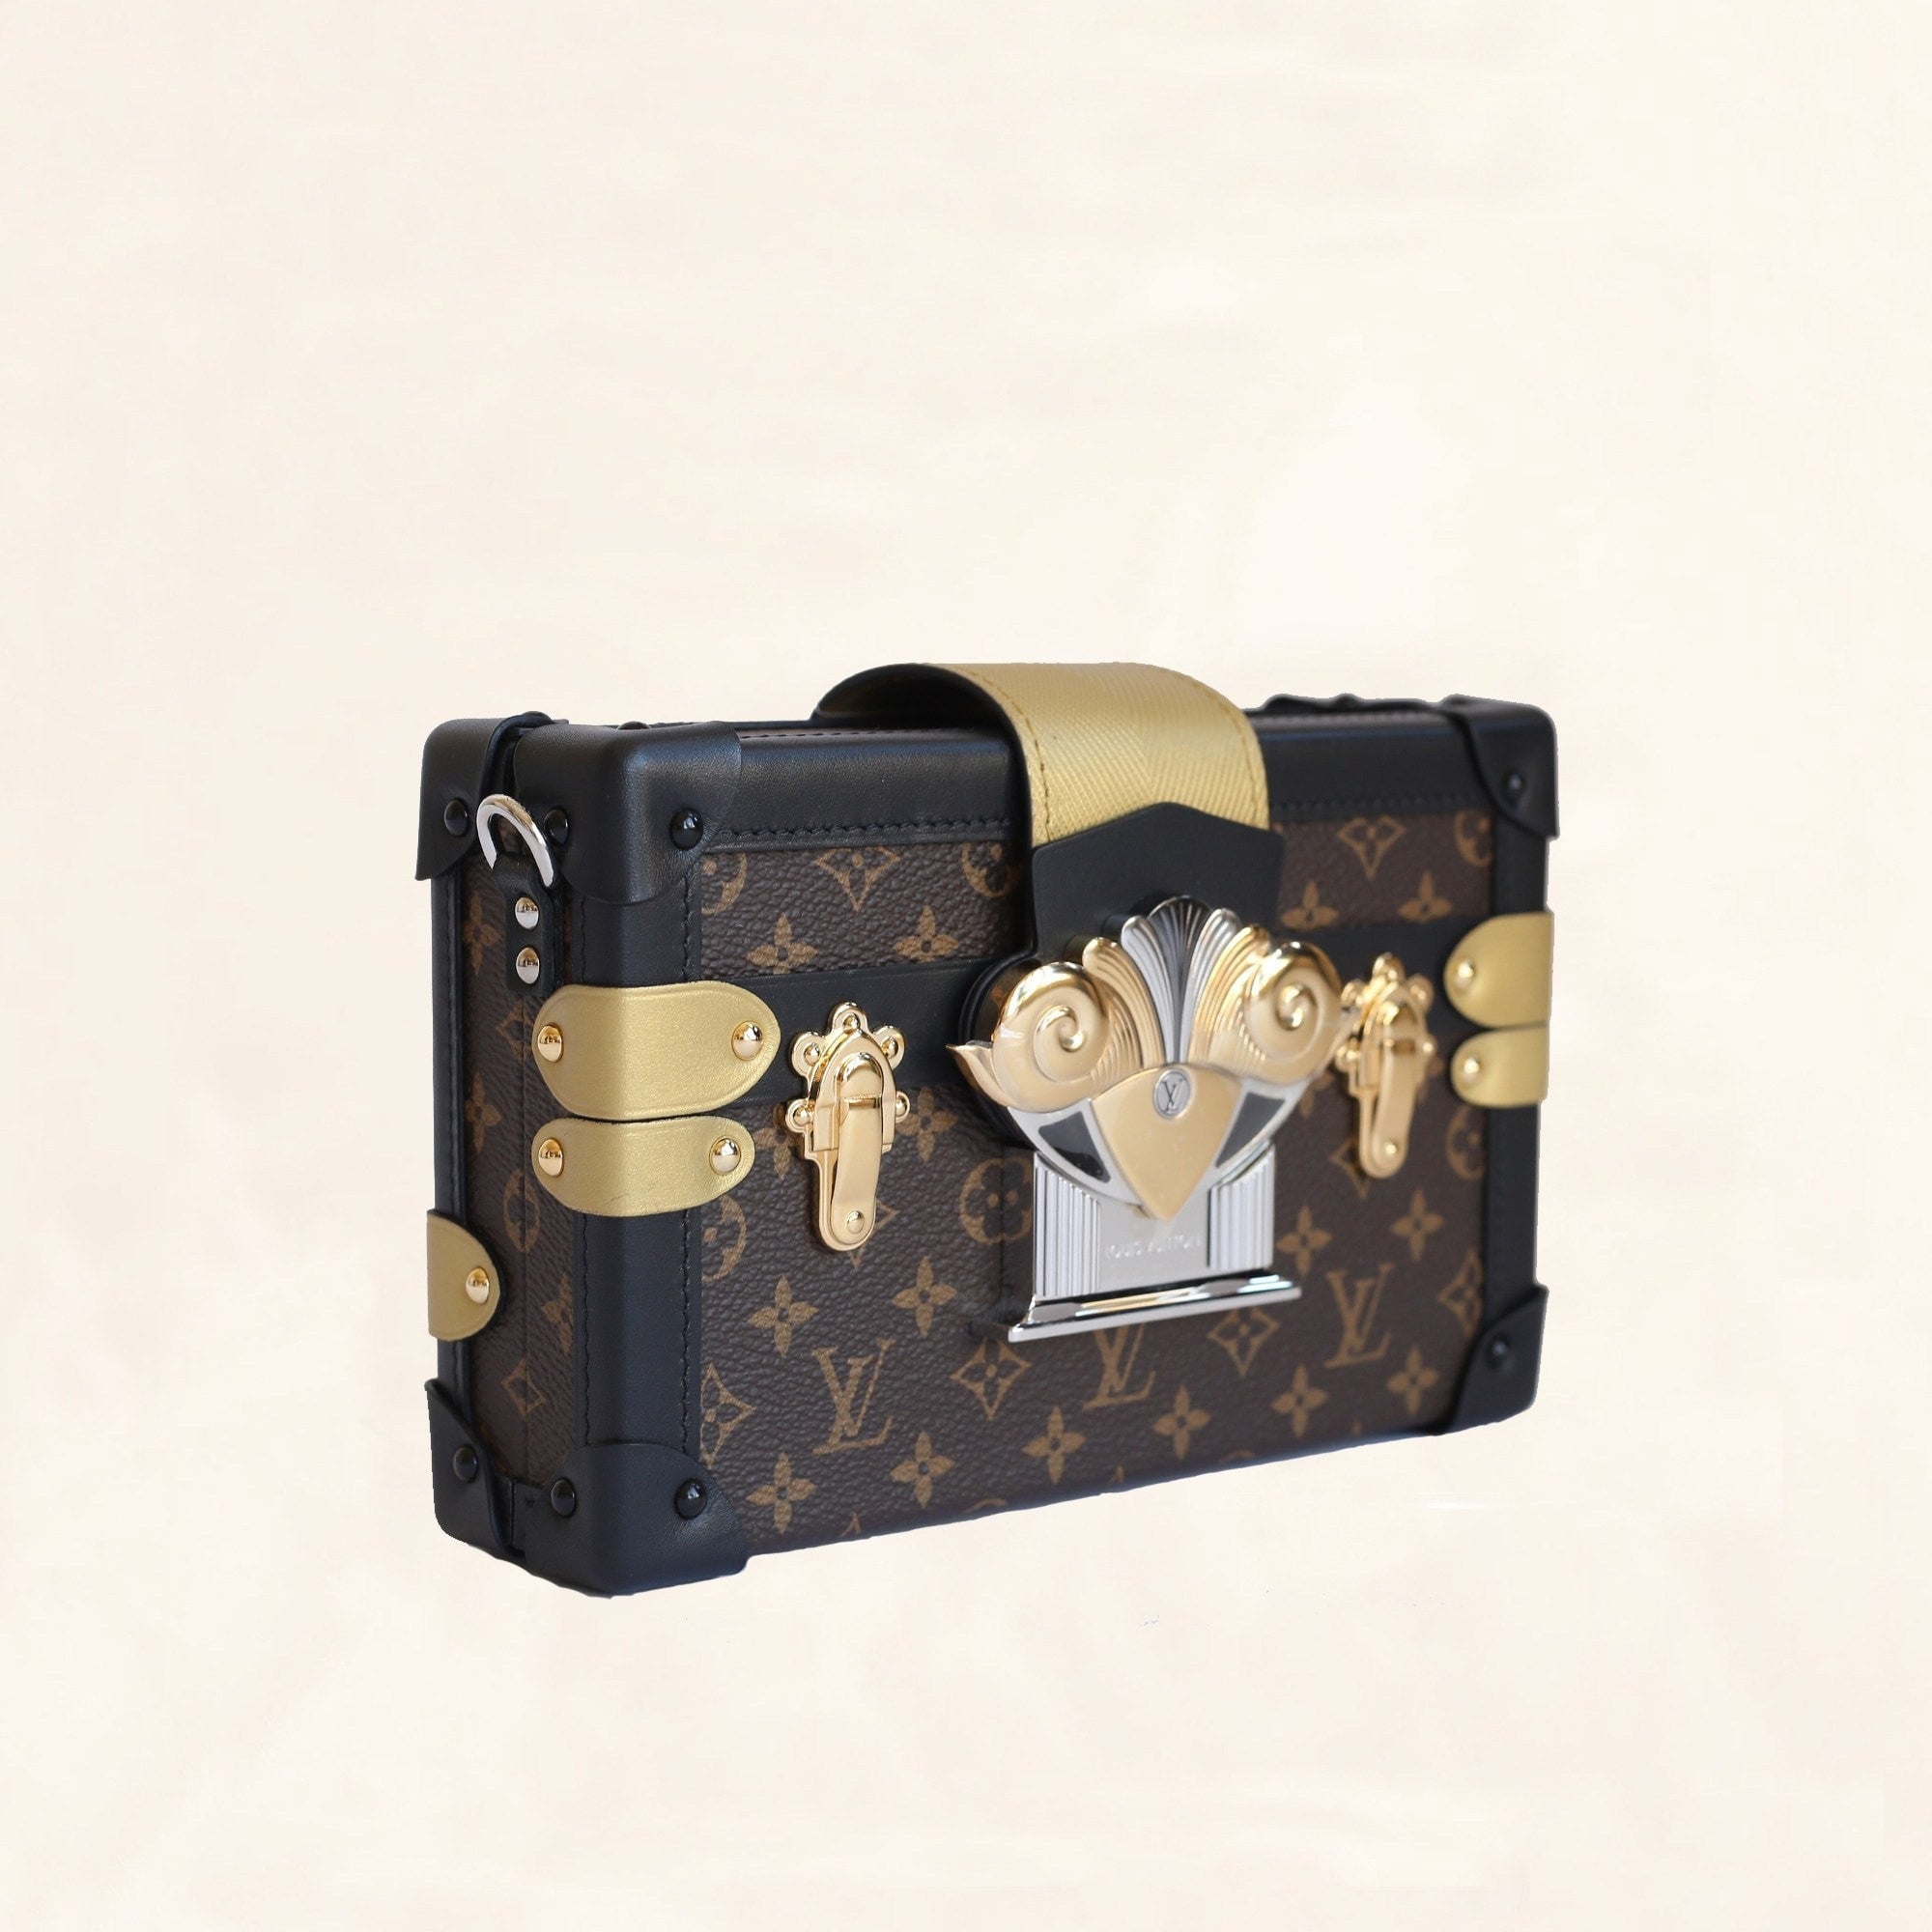 Petite Malle Capitale Monogram - Women - Handbags